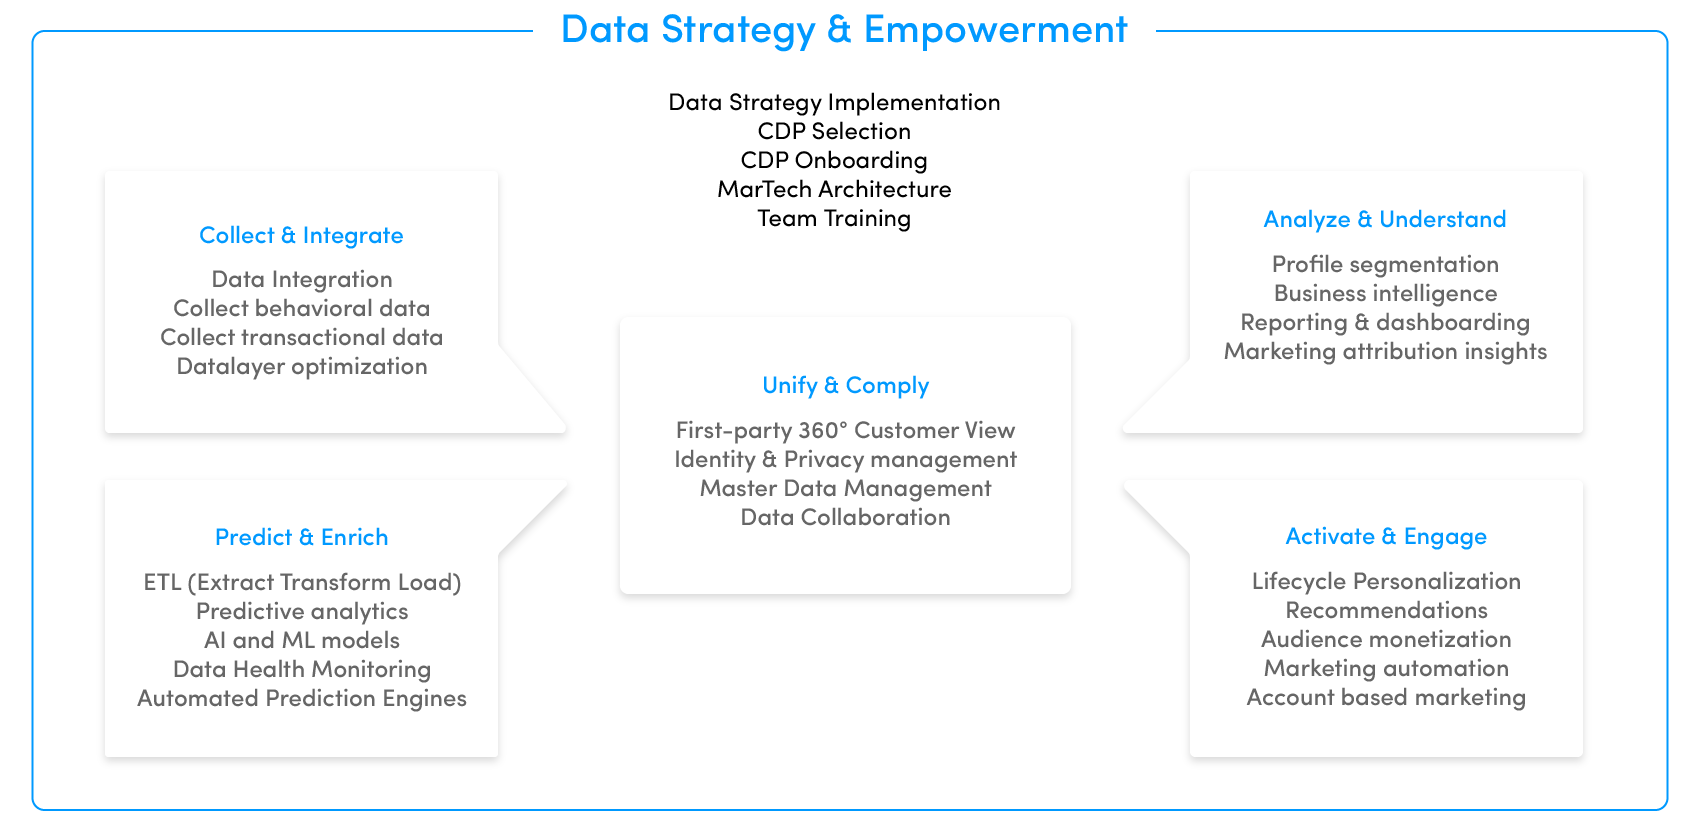 Data Strategy & Empowerment